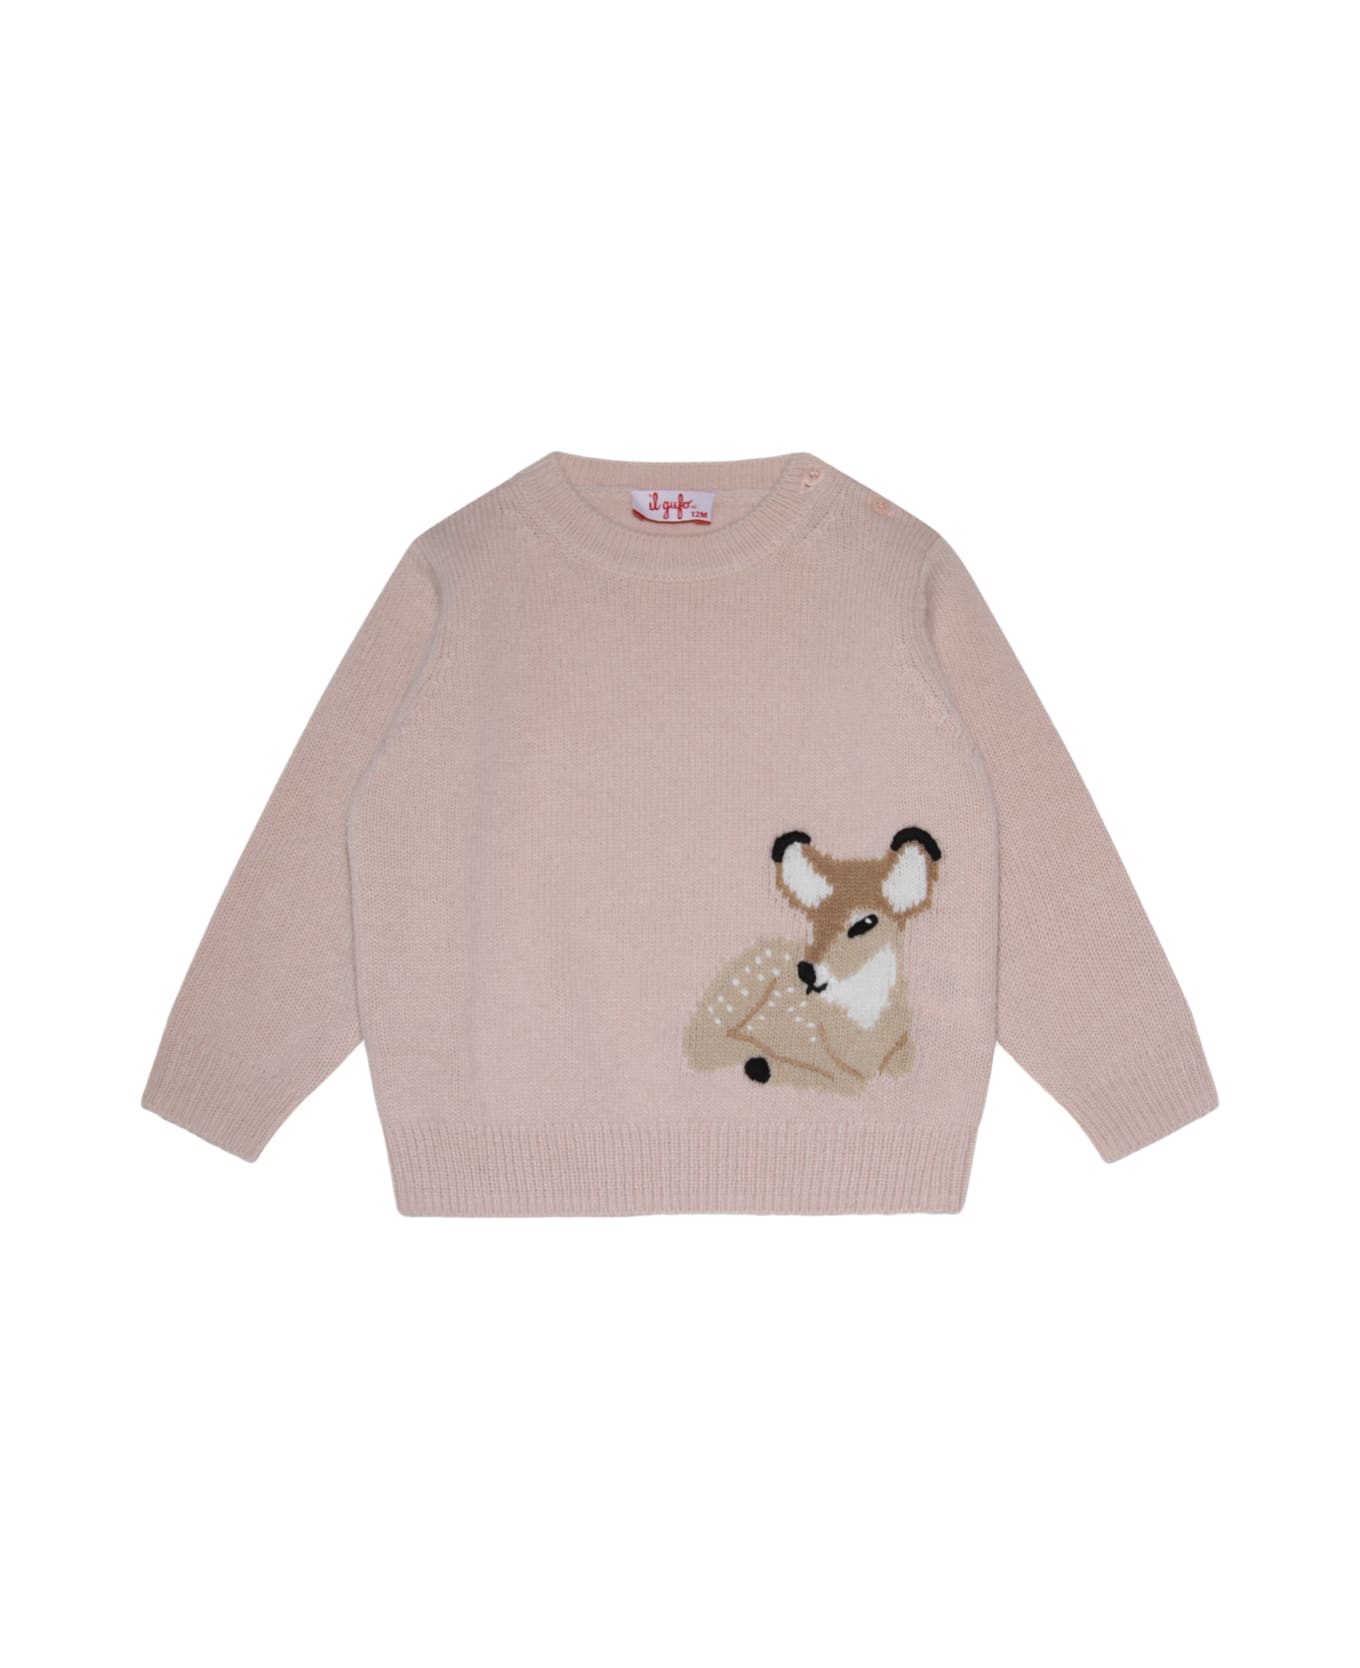 Il Gufo Pink Knitwear - PANNA/FRAGOLA/BETULLA